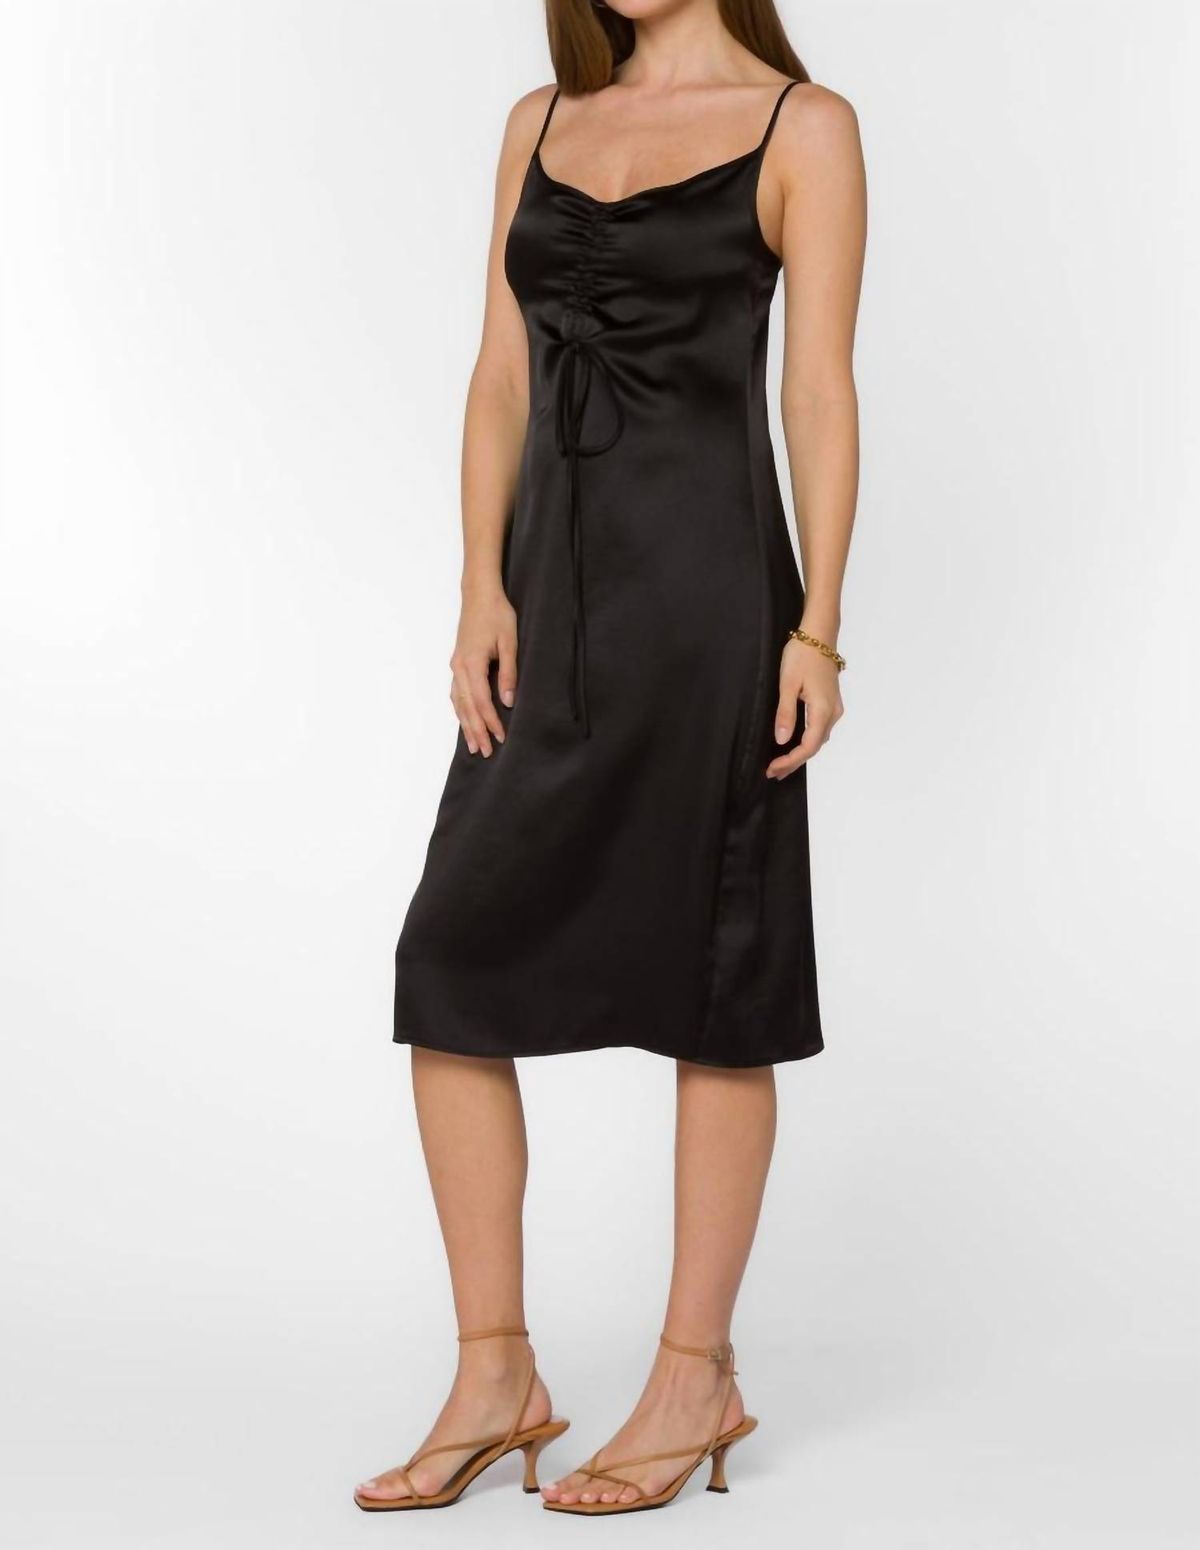 Style 1-2605148259-2901 Velvet Heart Size M Black Cocktail Dress on Queenly